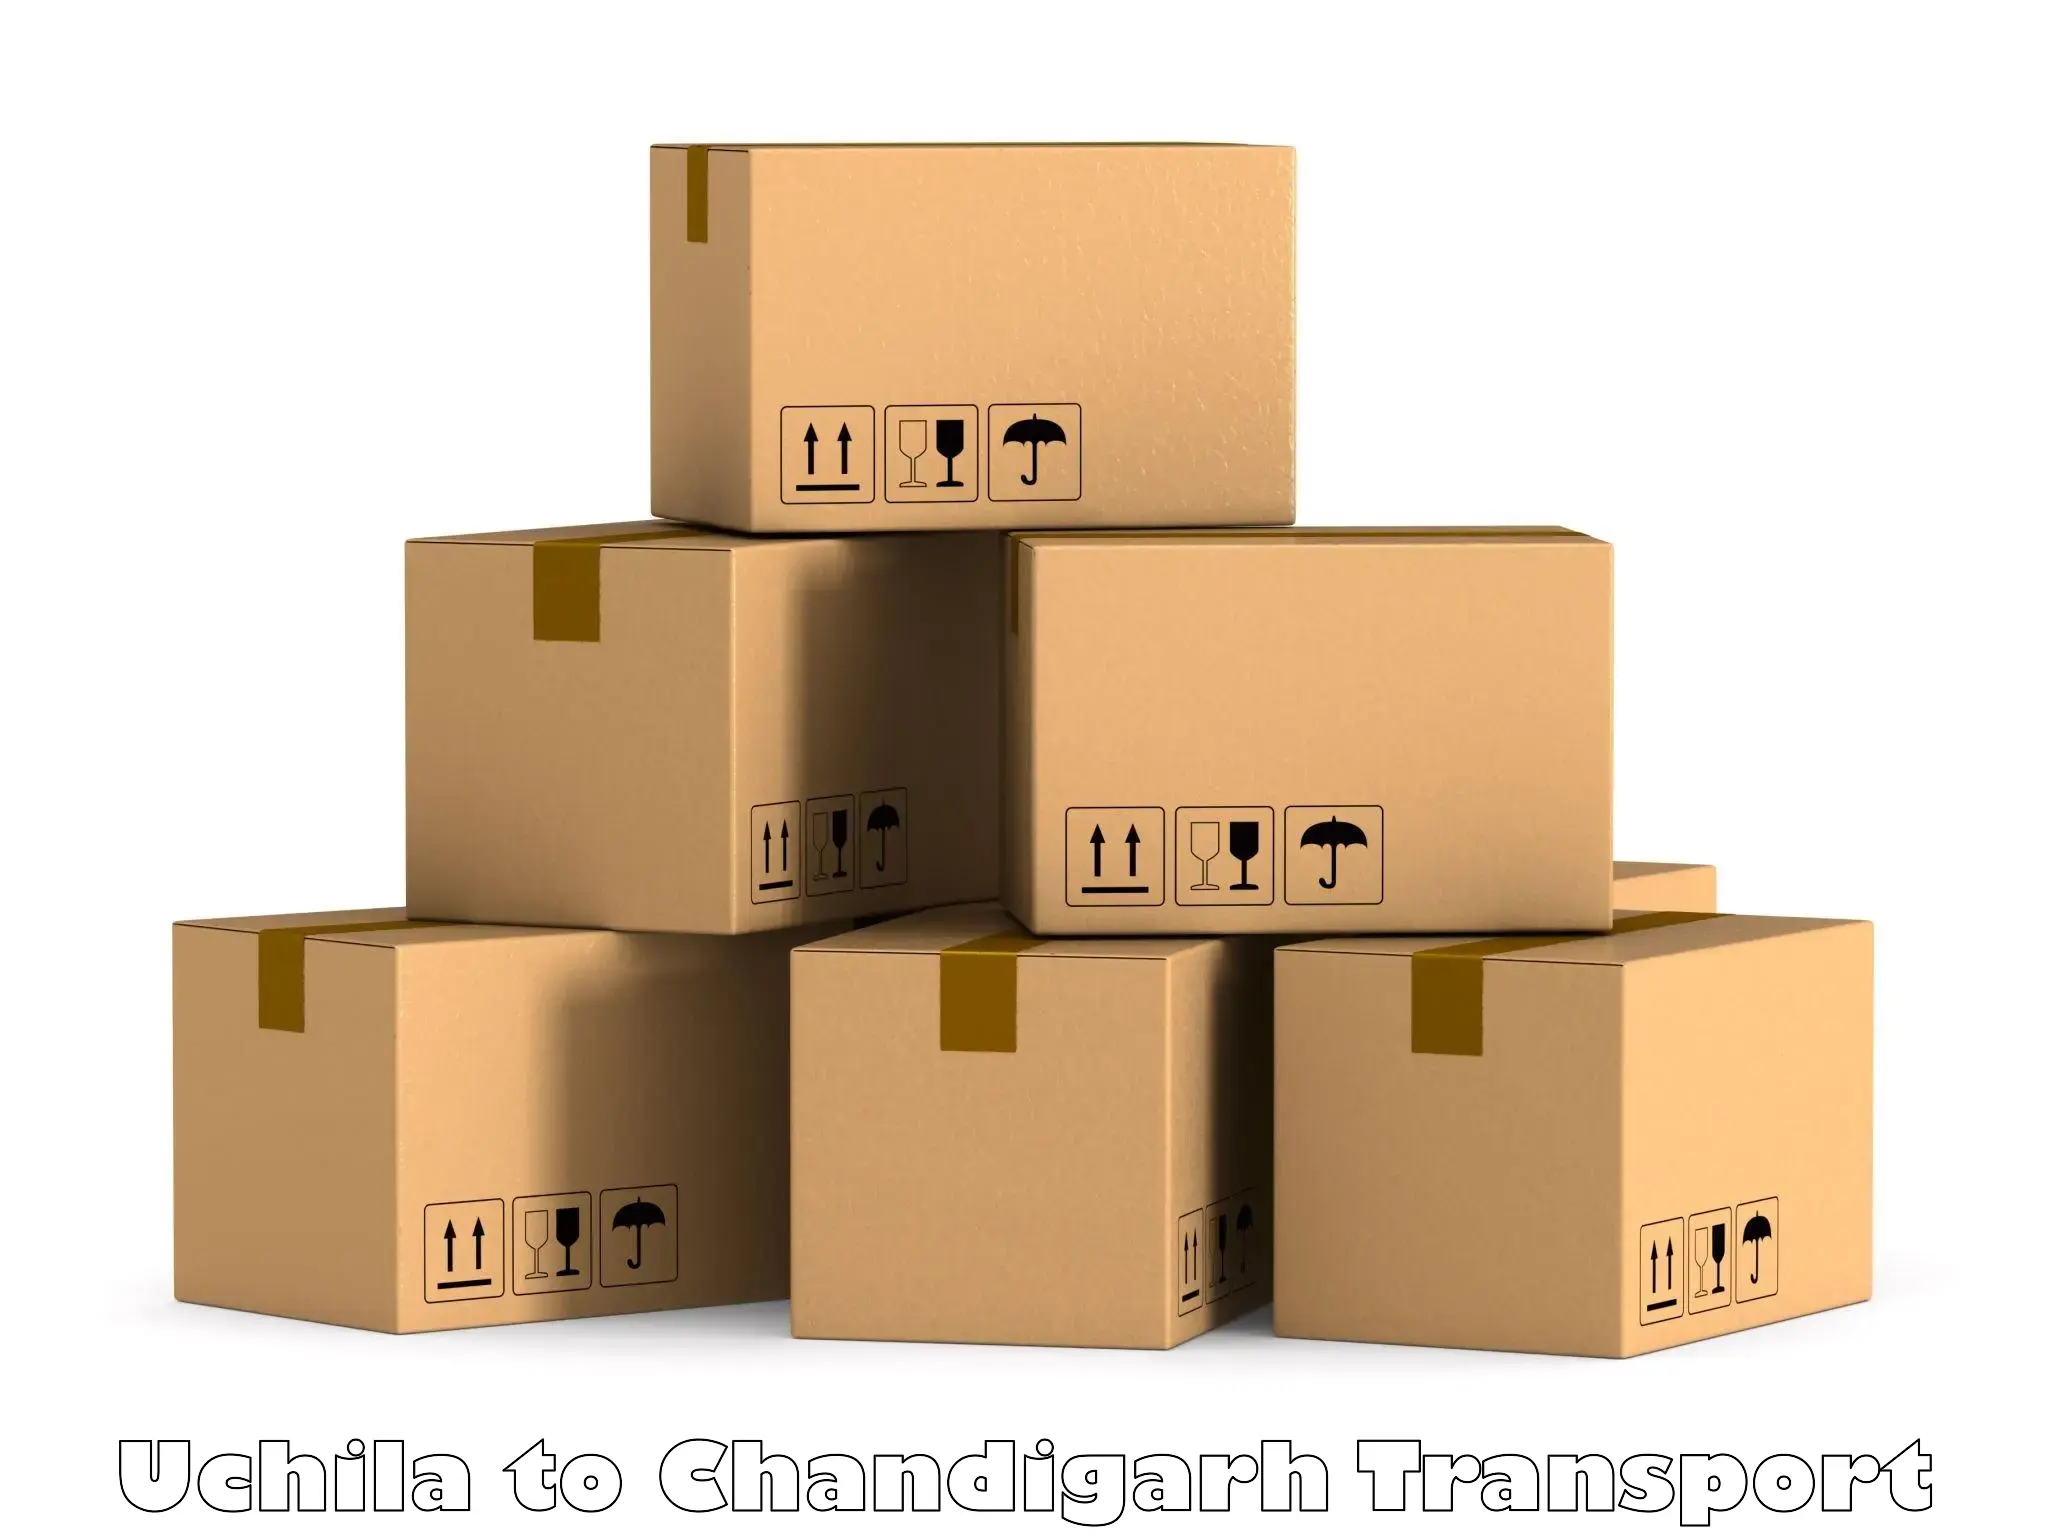 Two wheeler parcel service in Uchila to Chandigarh